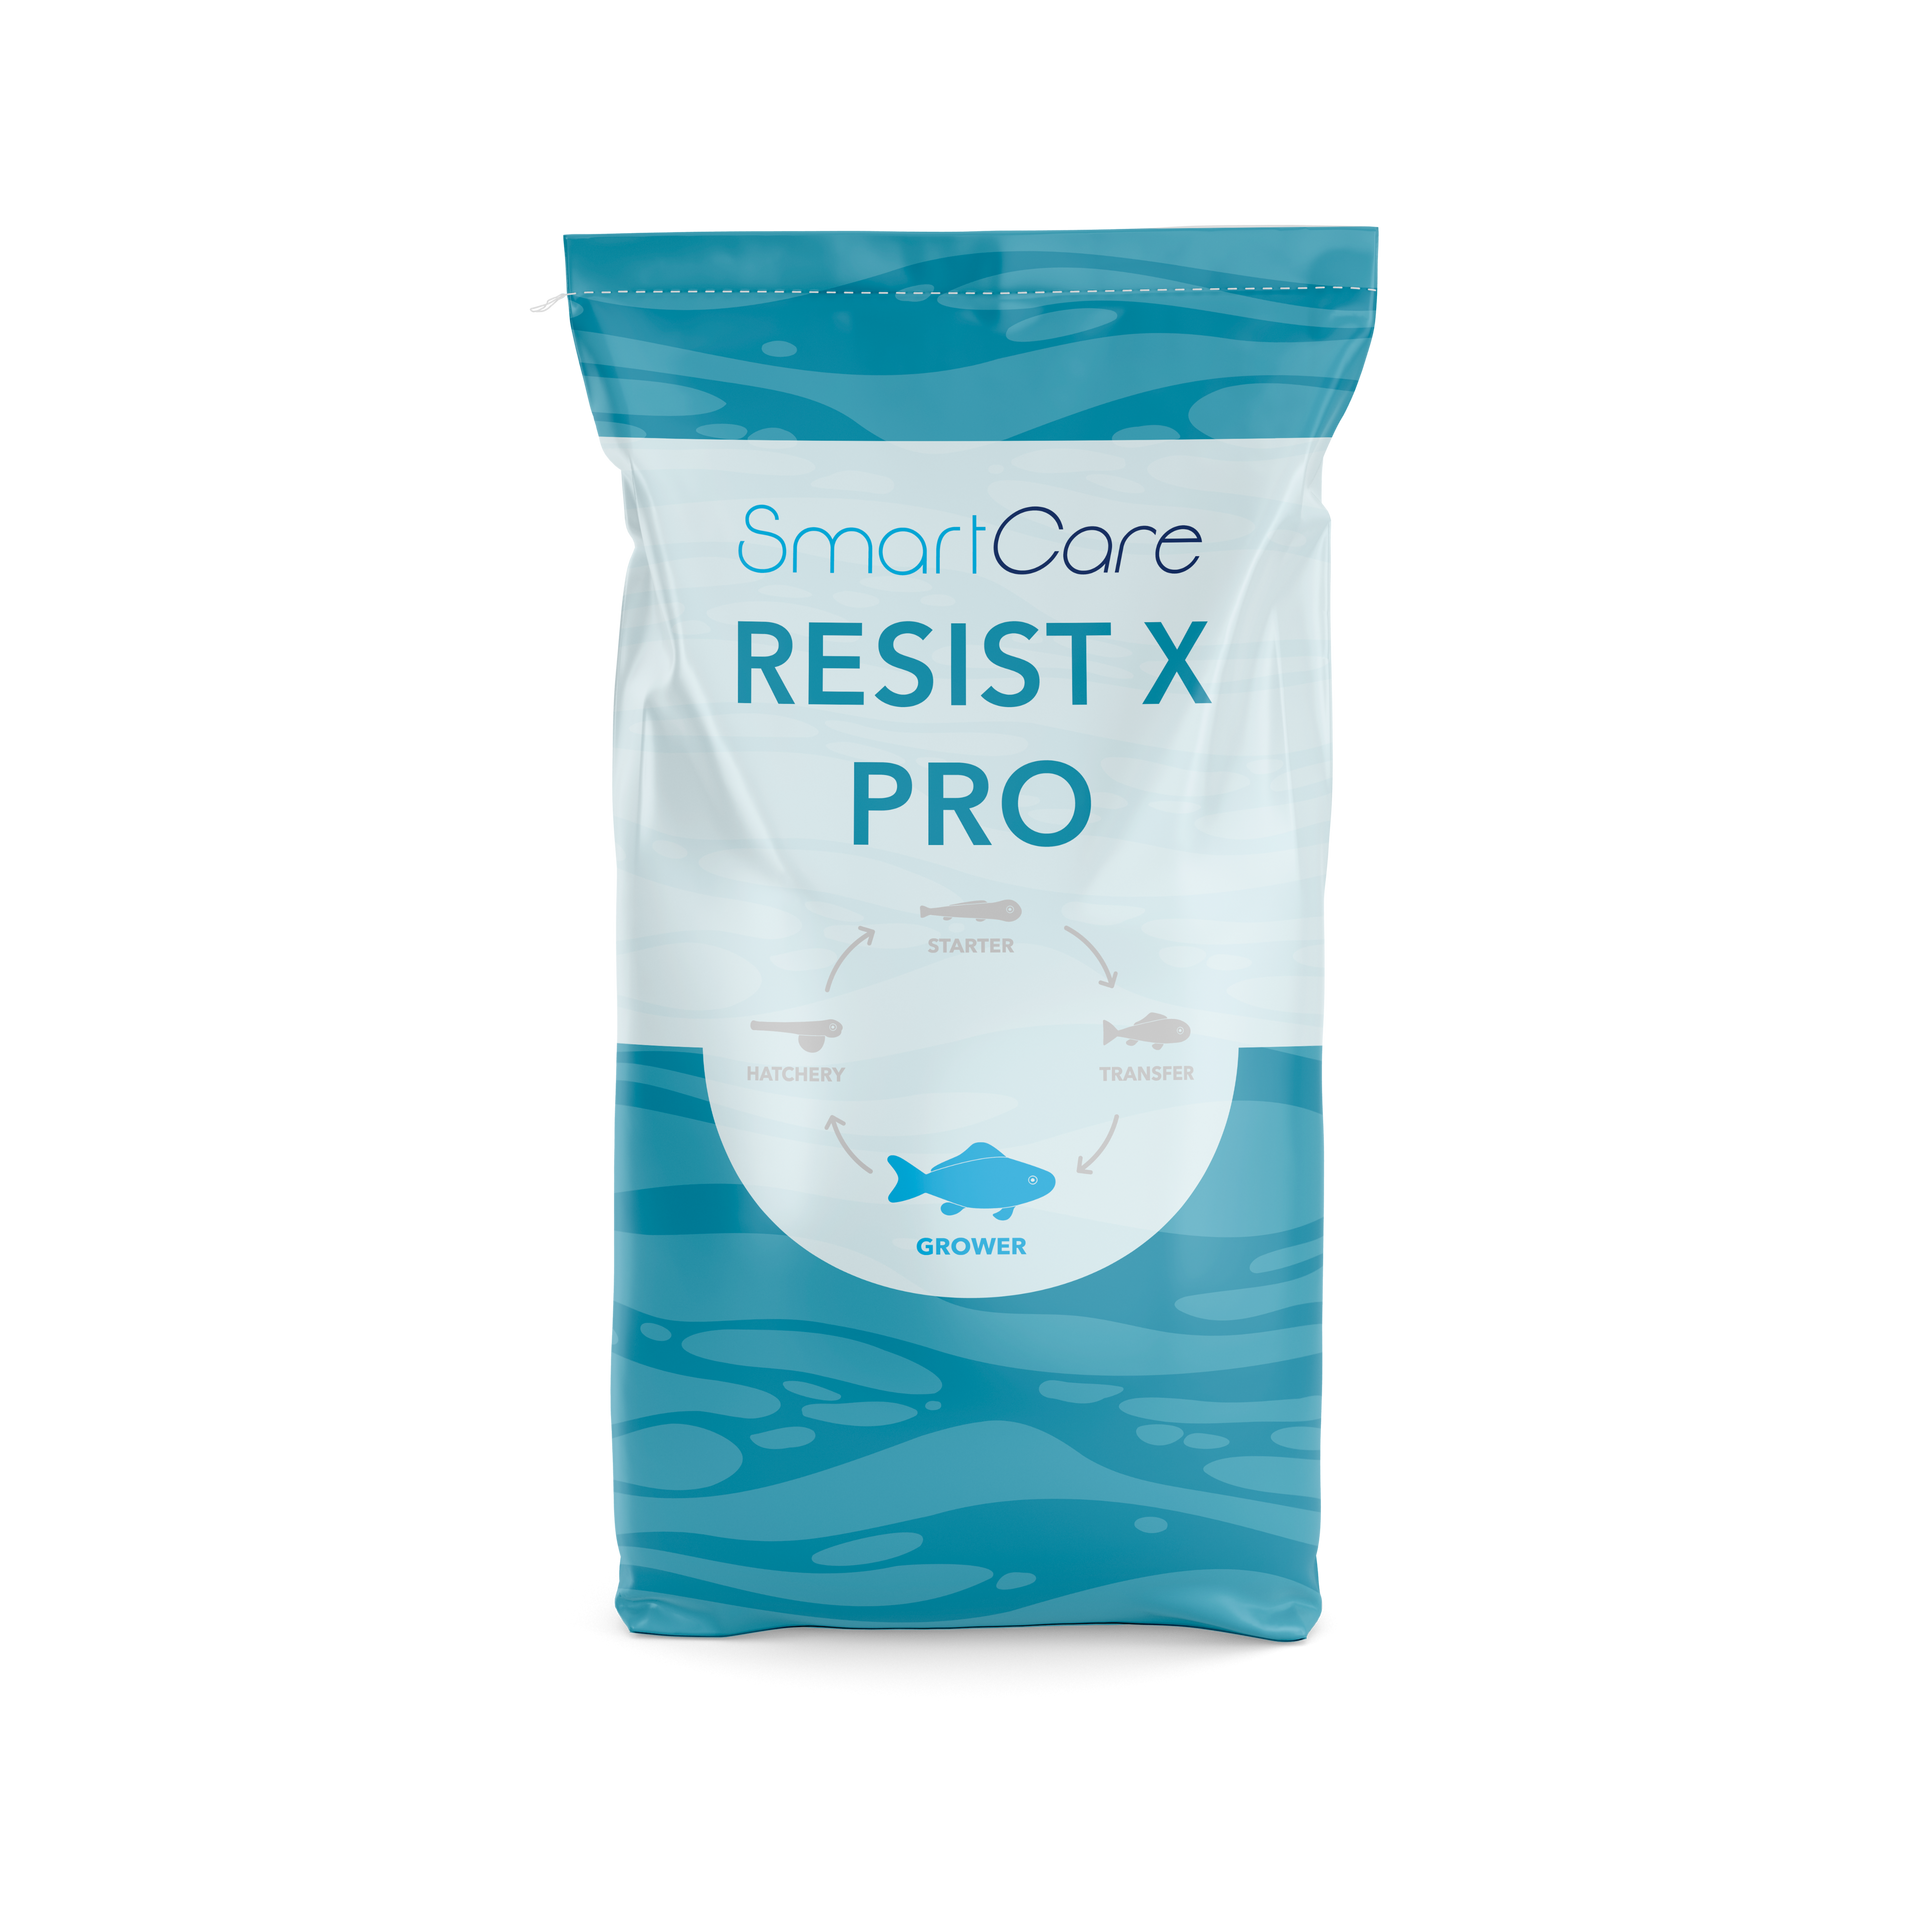 SmartCare Resist X Pro health feed for aquaculture fish